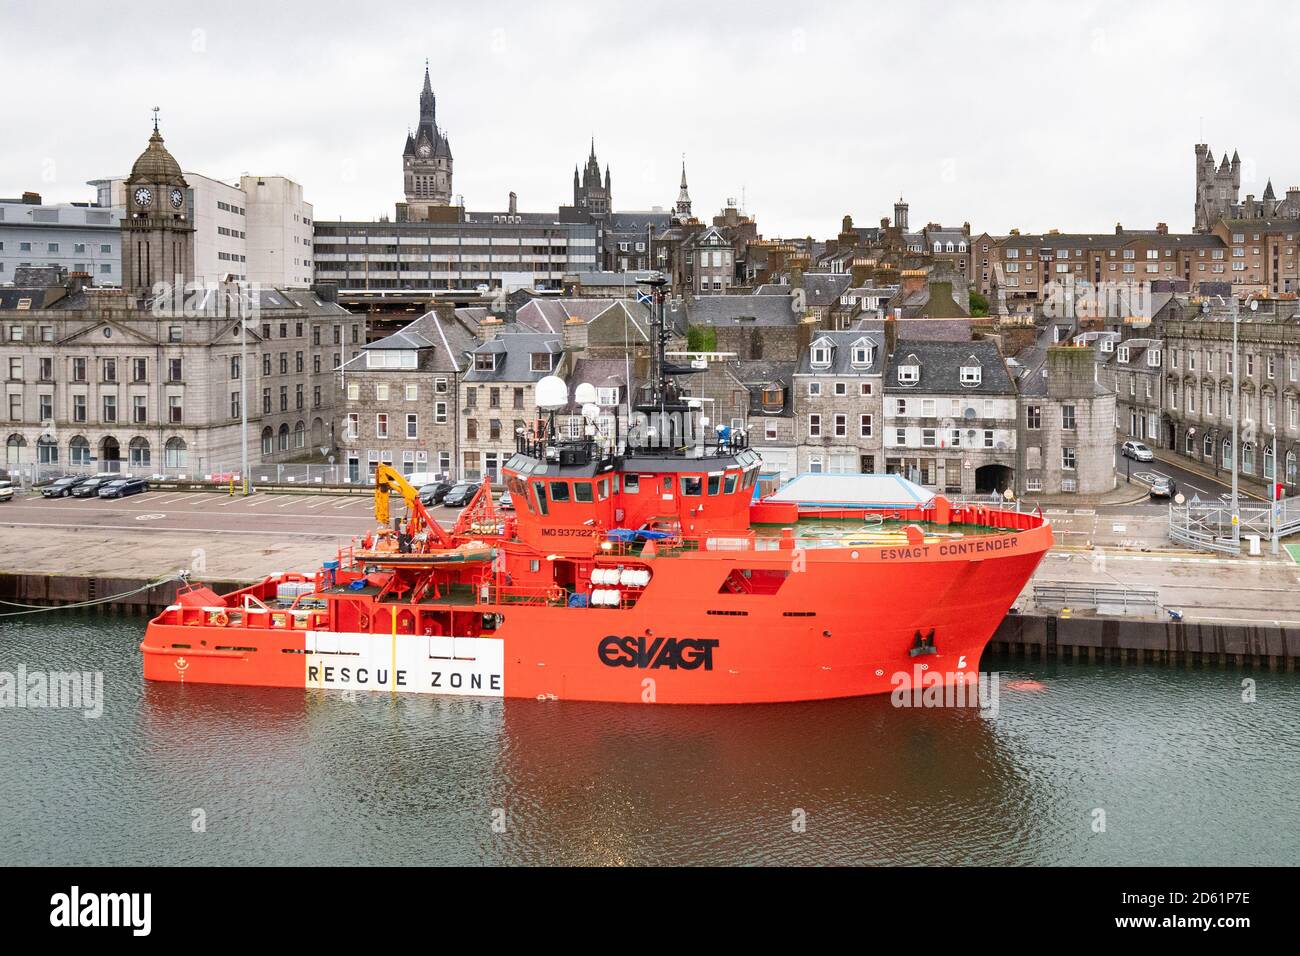 Esvagt contender standby safety vessel at Aberdeen harbour, Scotland UK Stock Photo